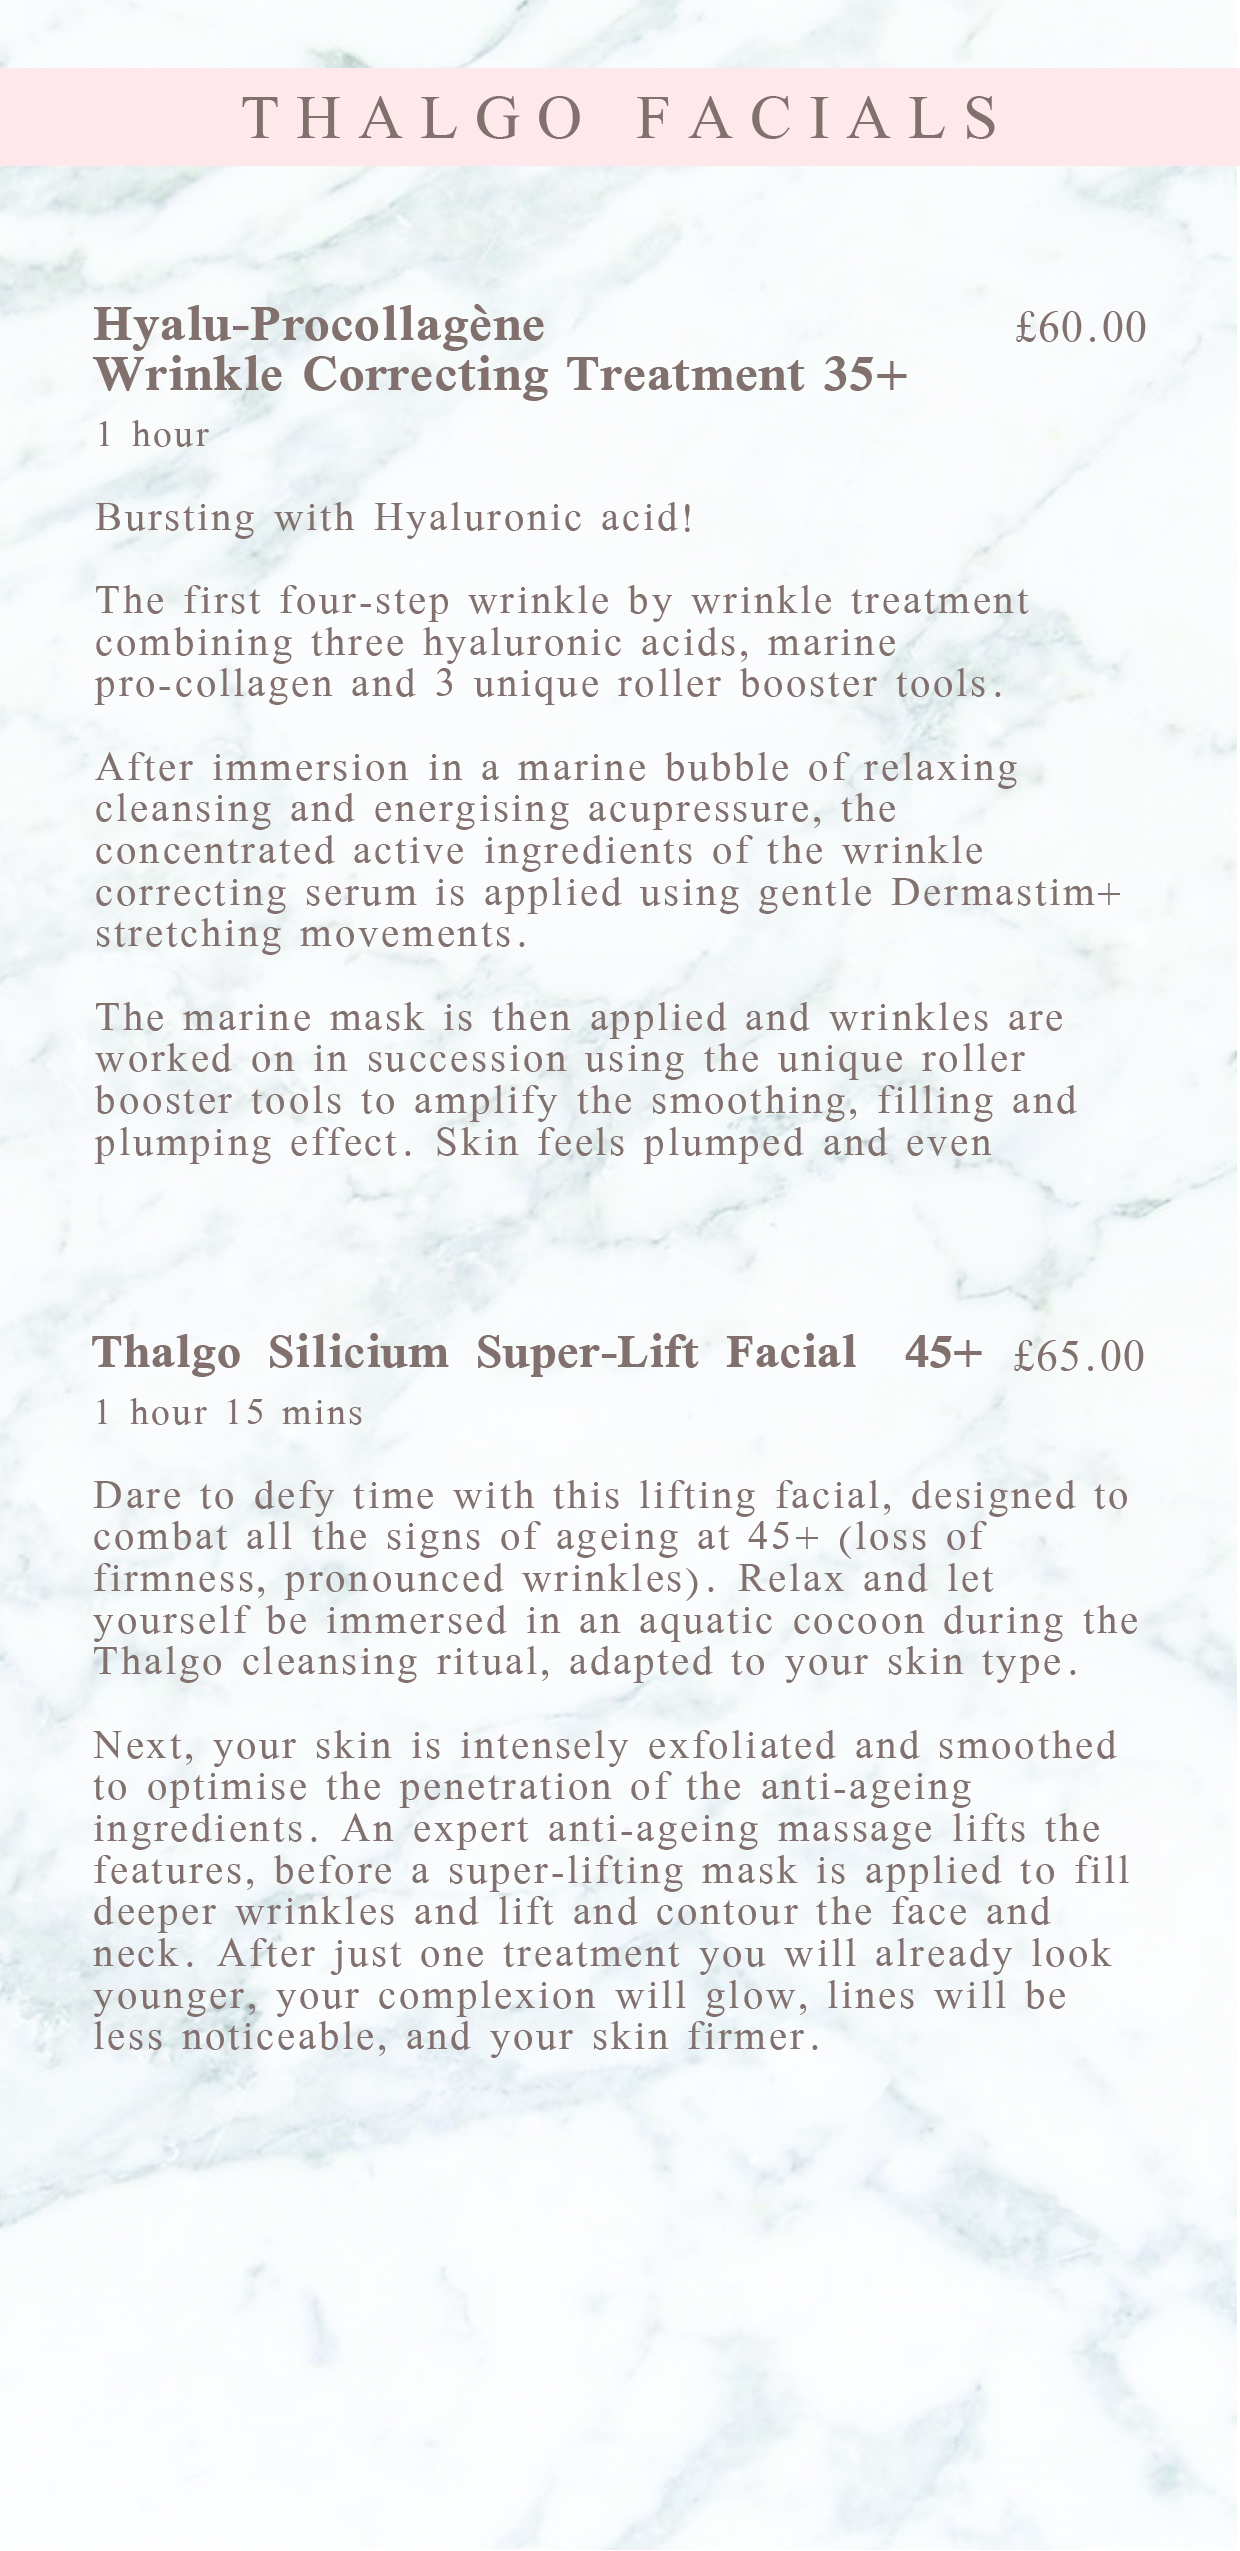 Simply Stunning Hair & Beauty Salon, Ross-on-Wye. Thalgo Treatments.